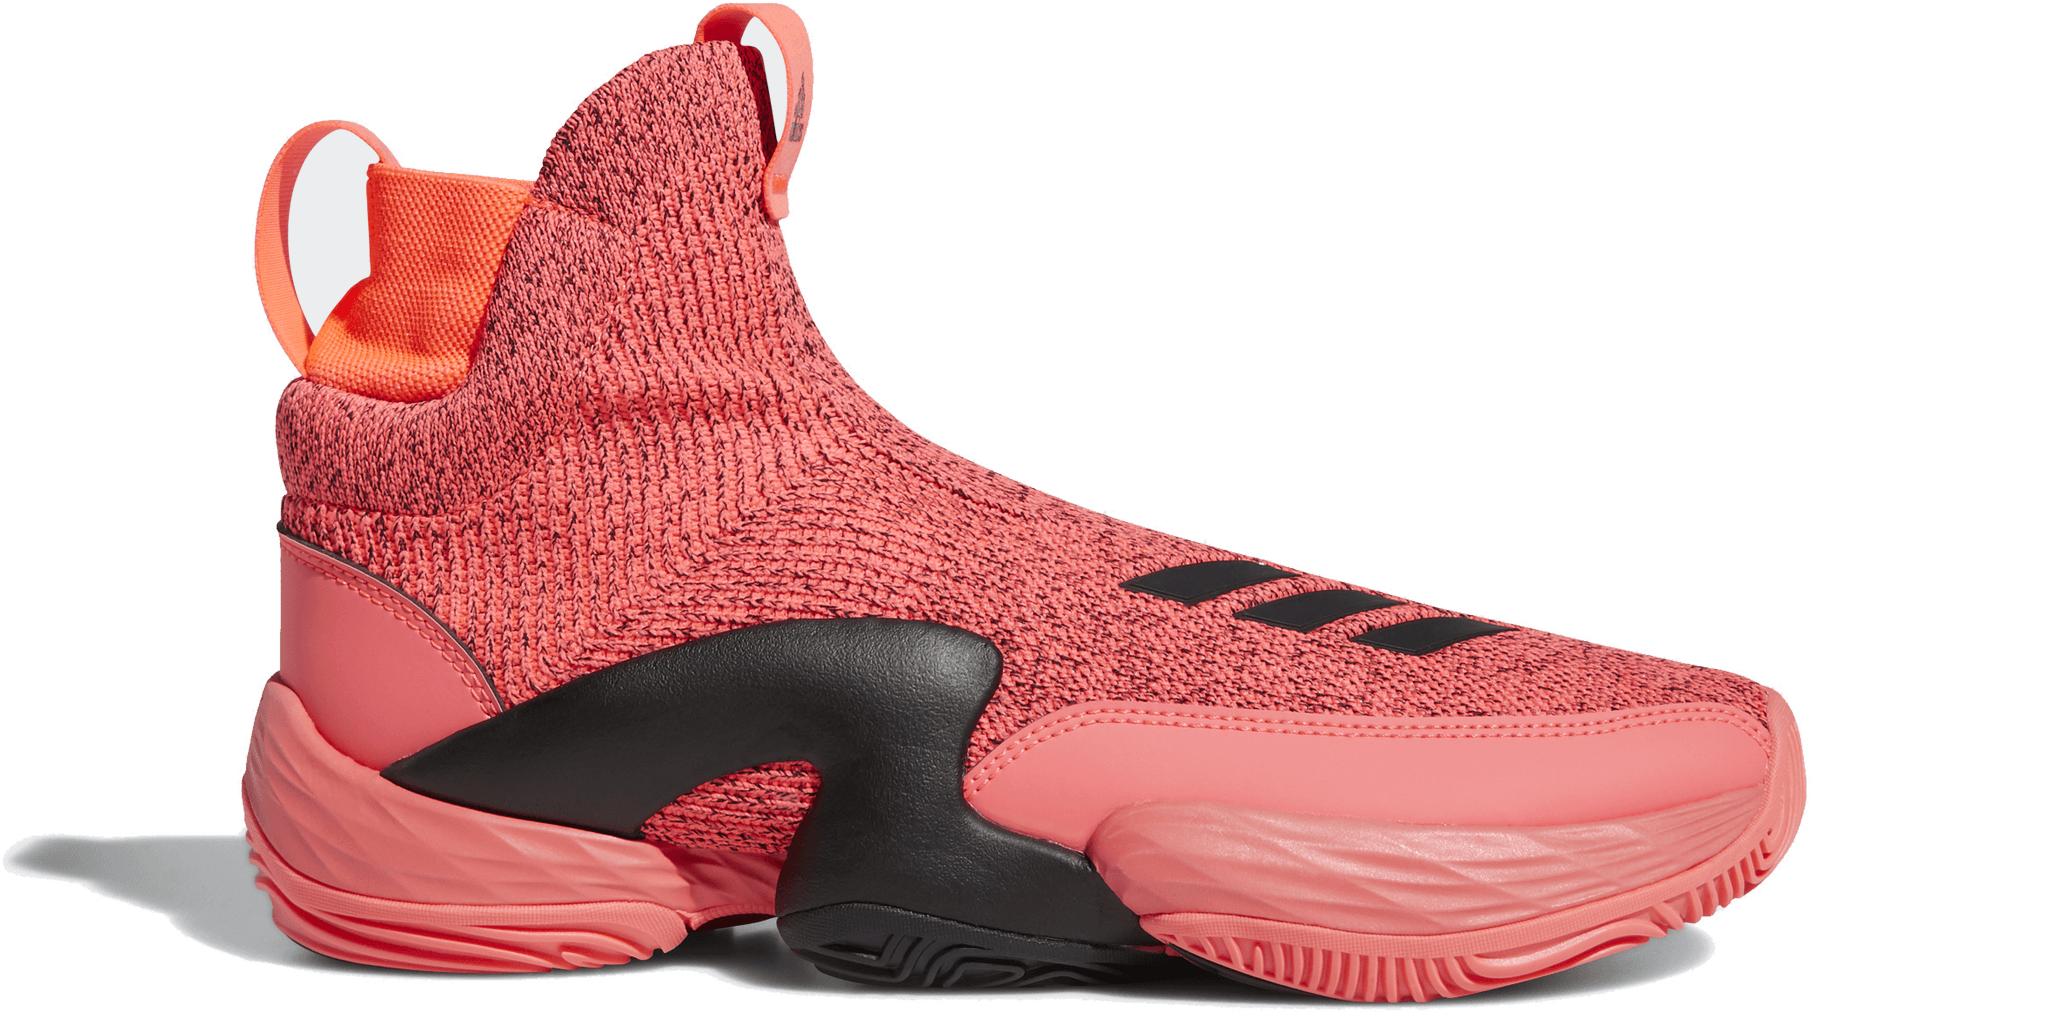 adidas laceless shoes basketball